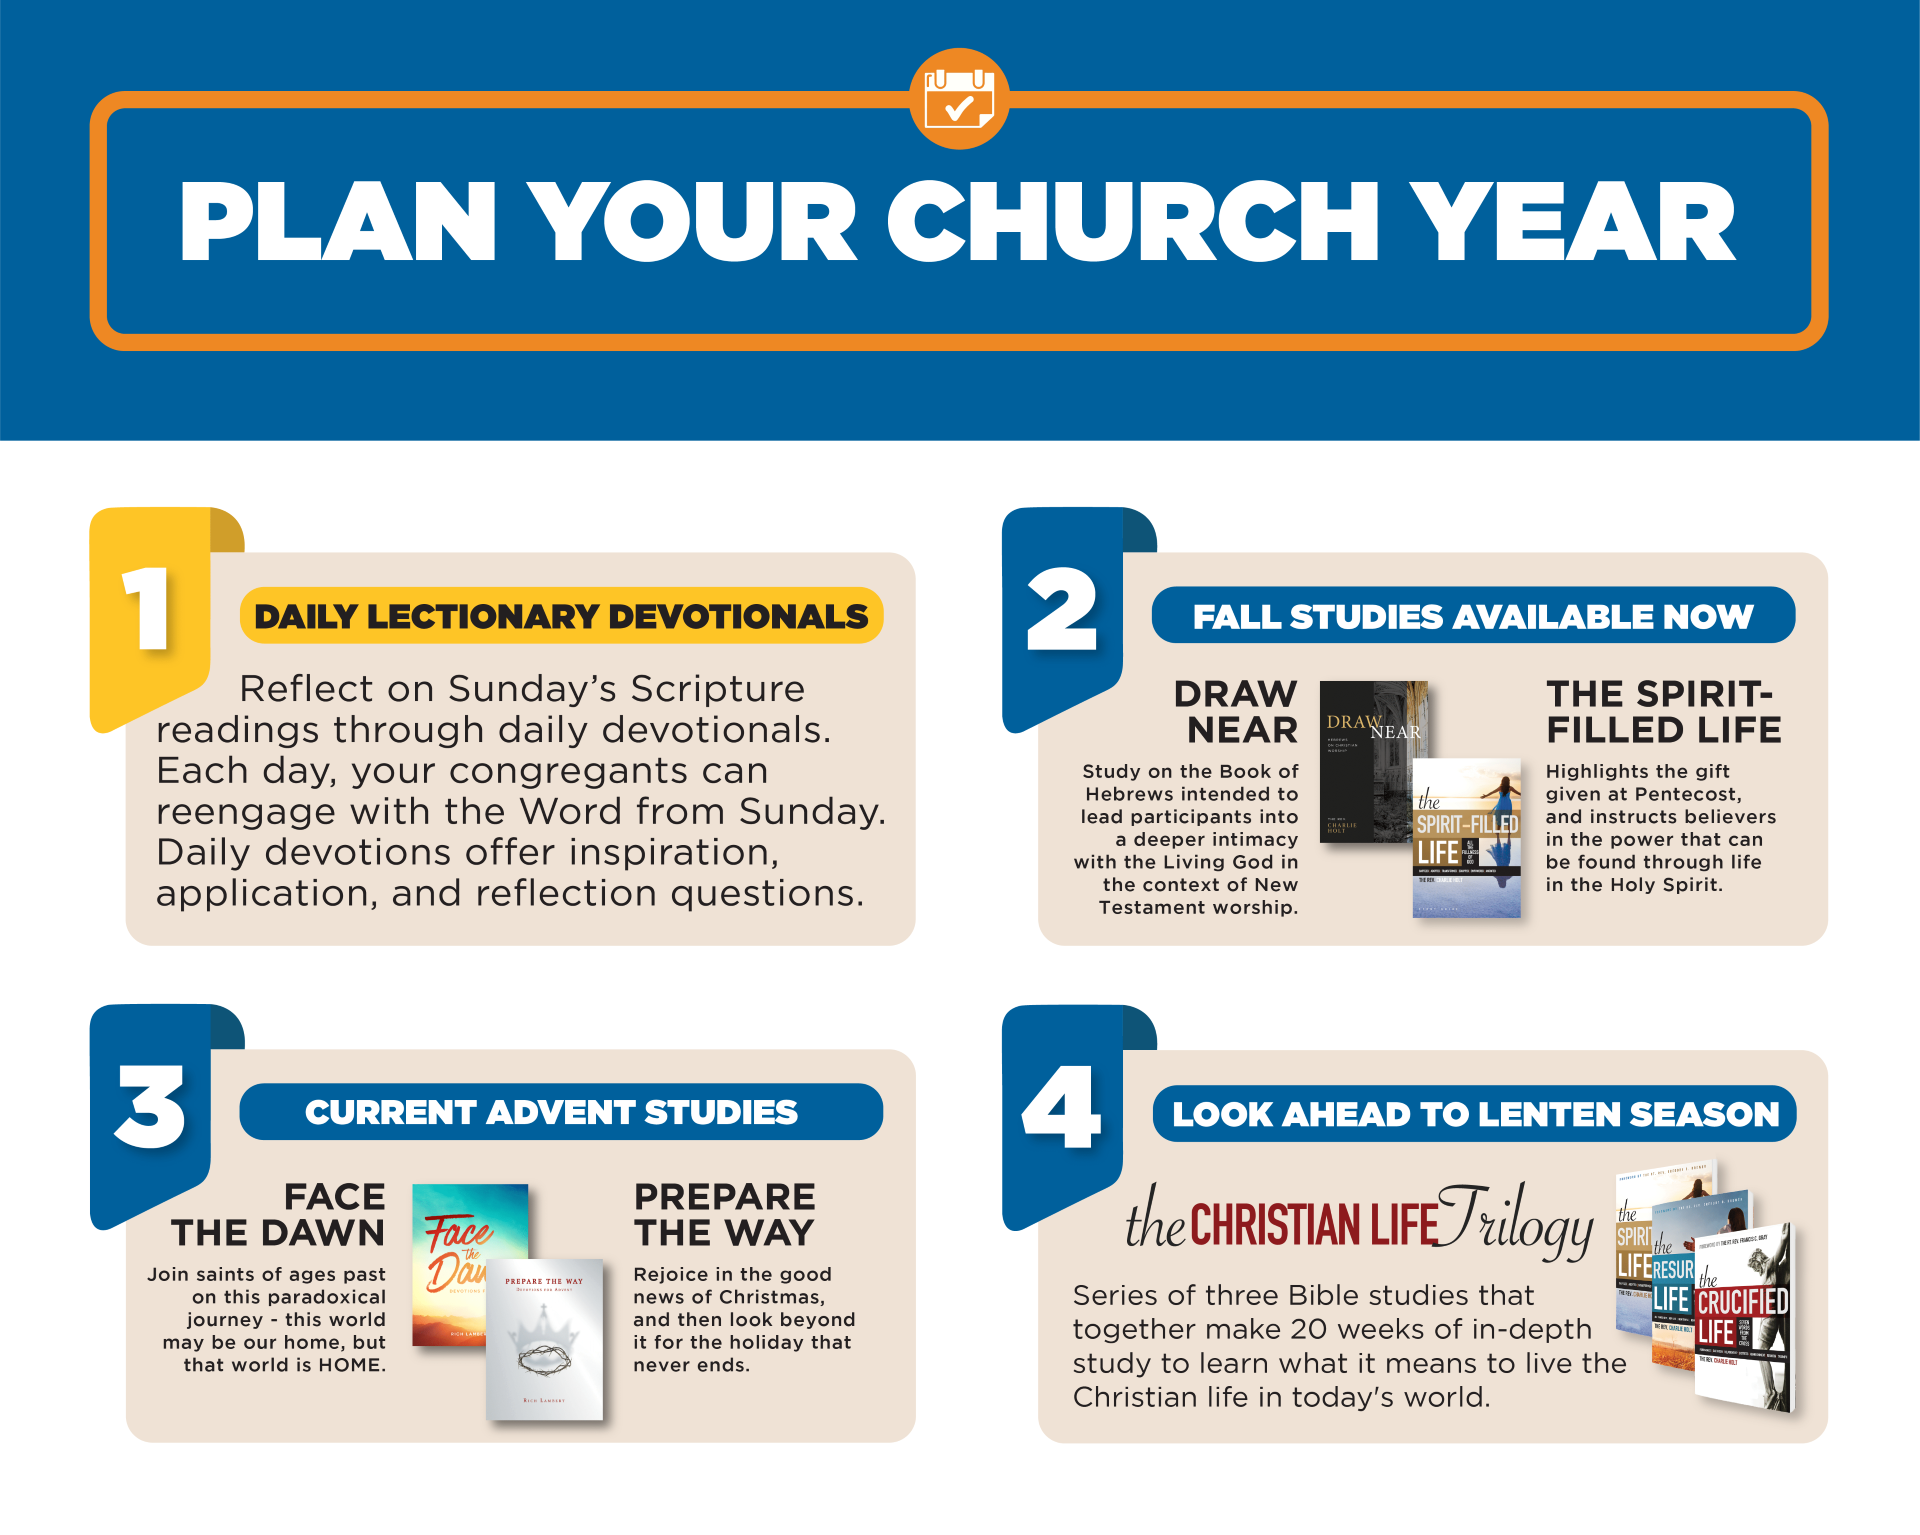 Plan Your Church Year